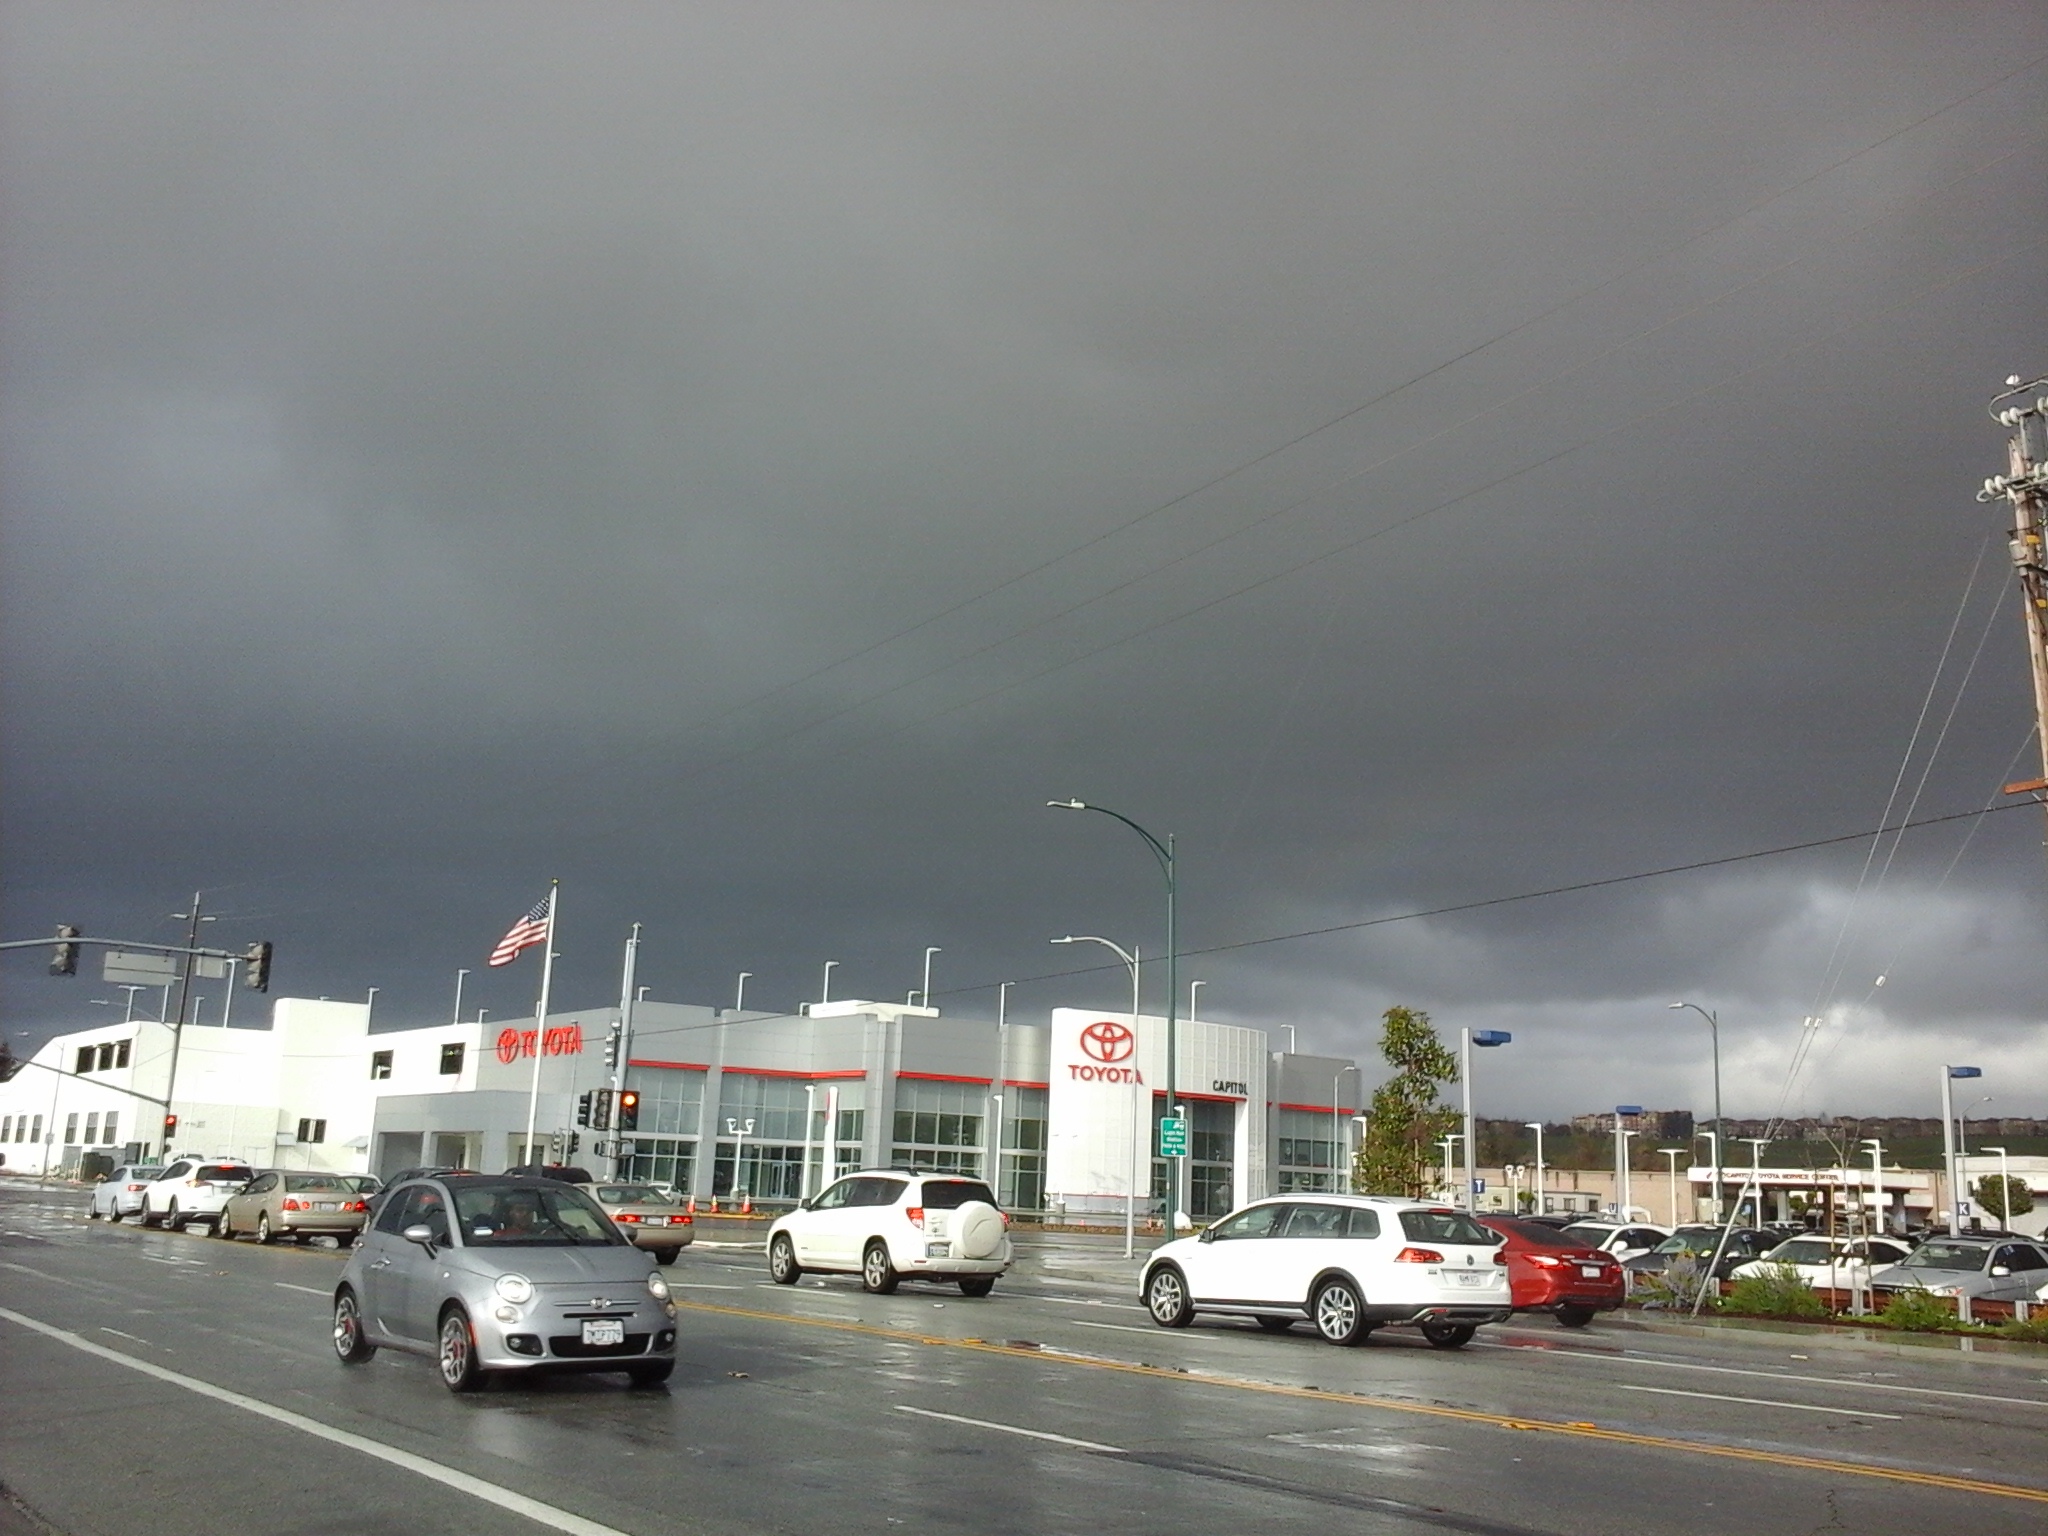 Capitol Toyota at Capitol Auto Mall IN San Jose, rainy sky